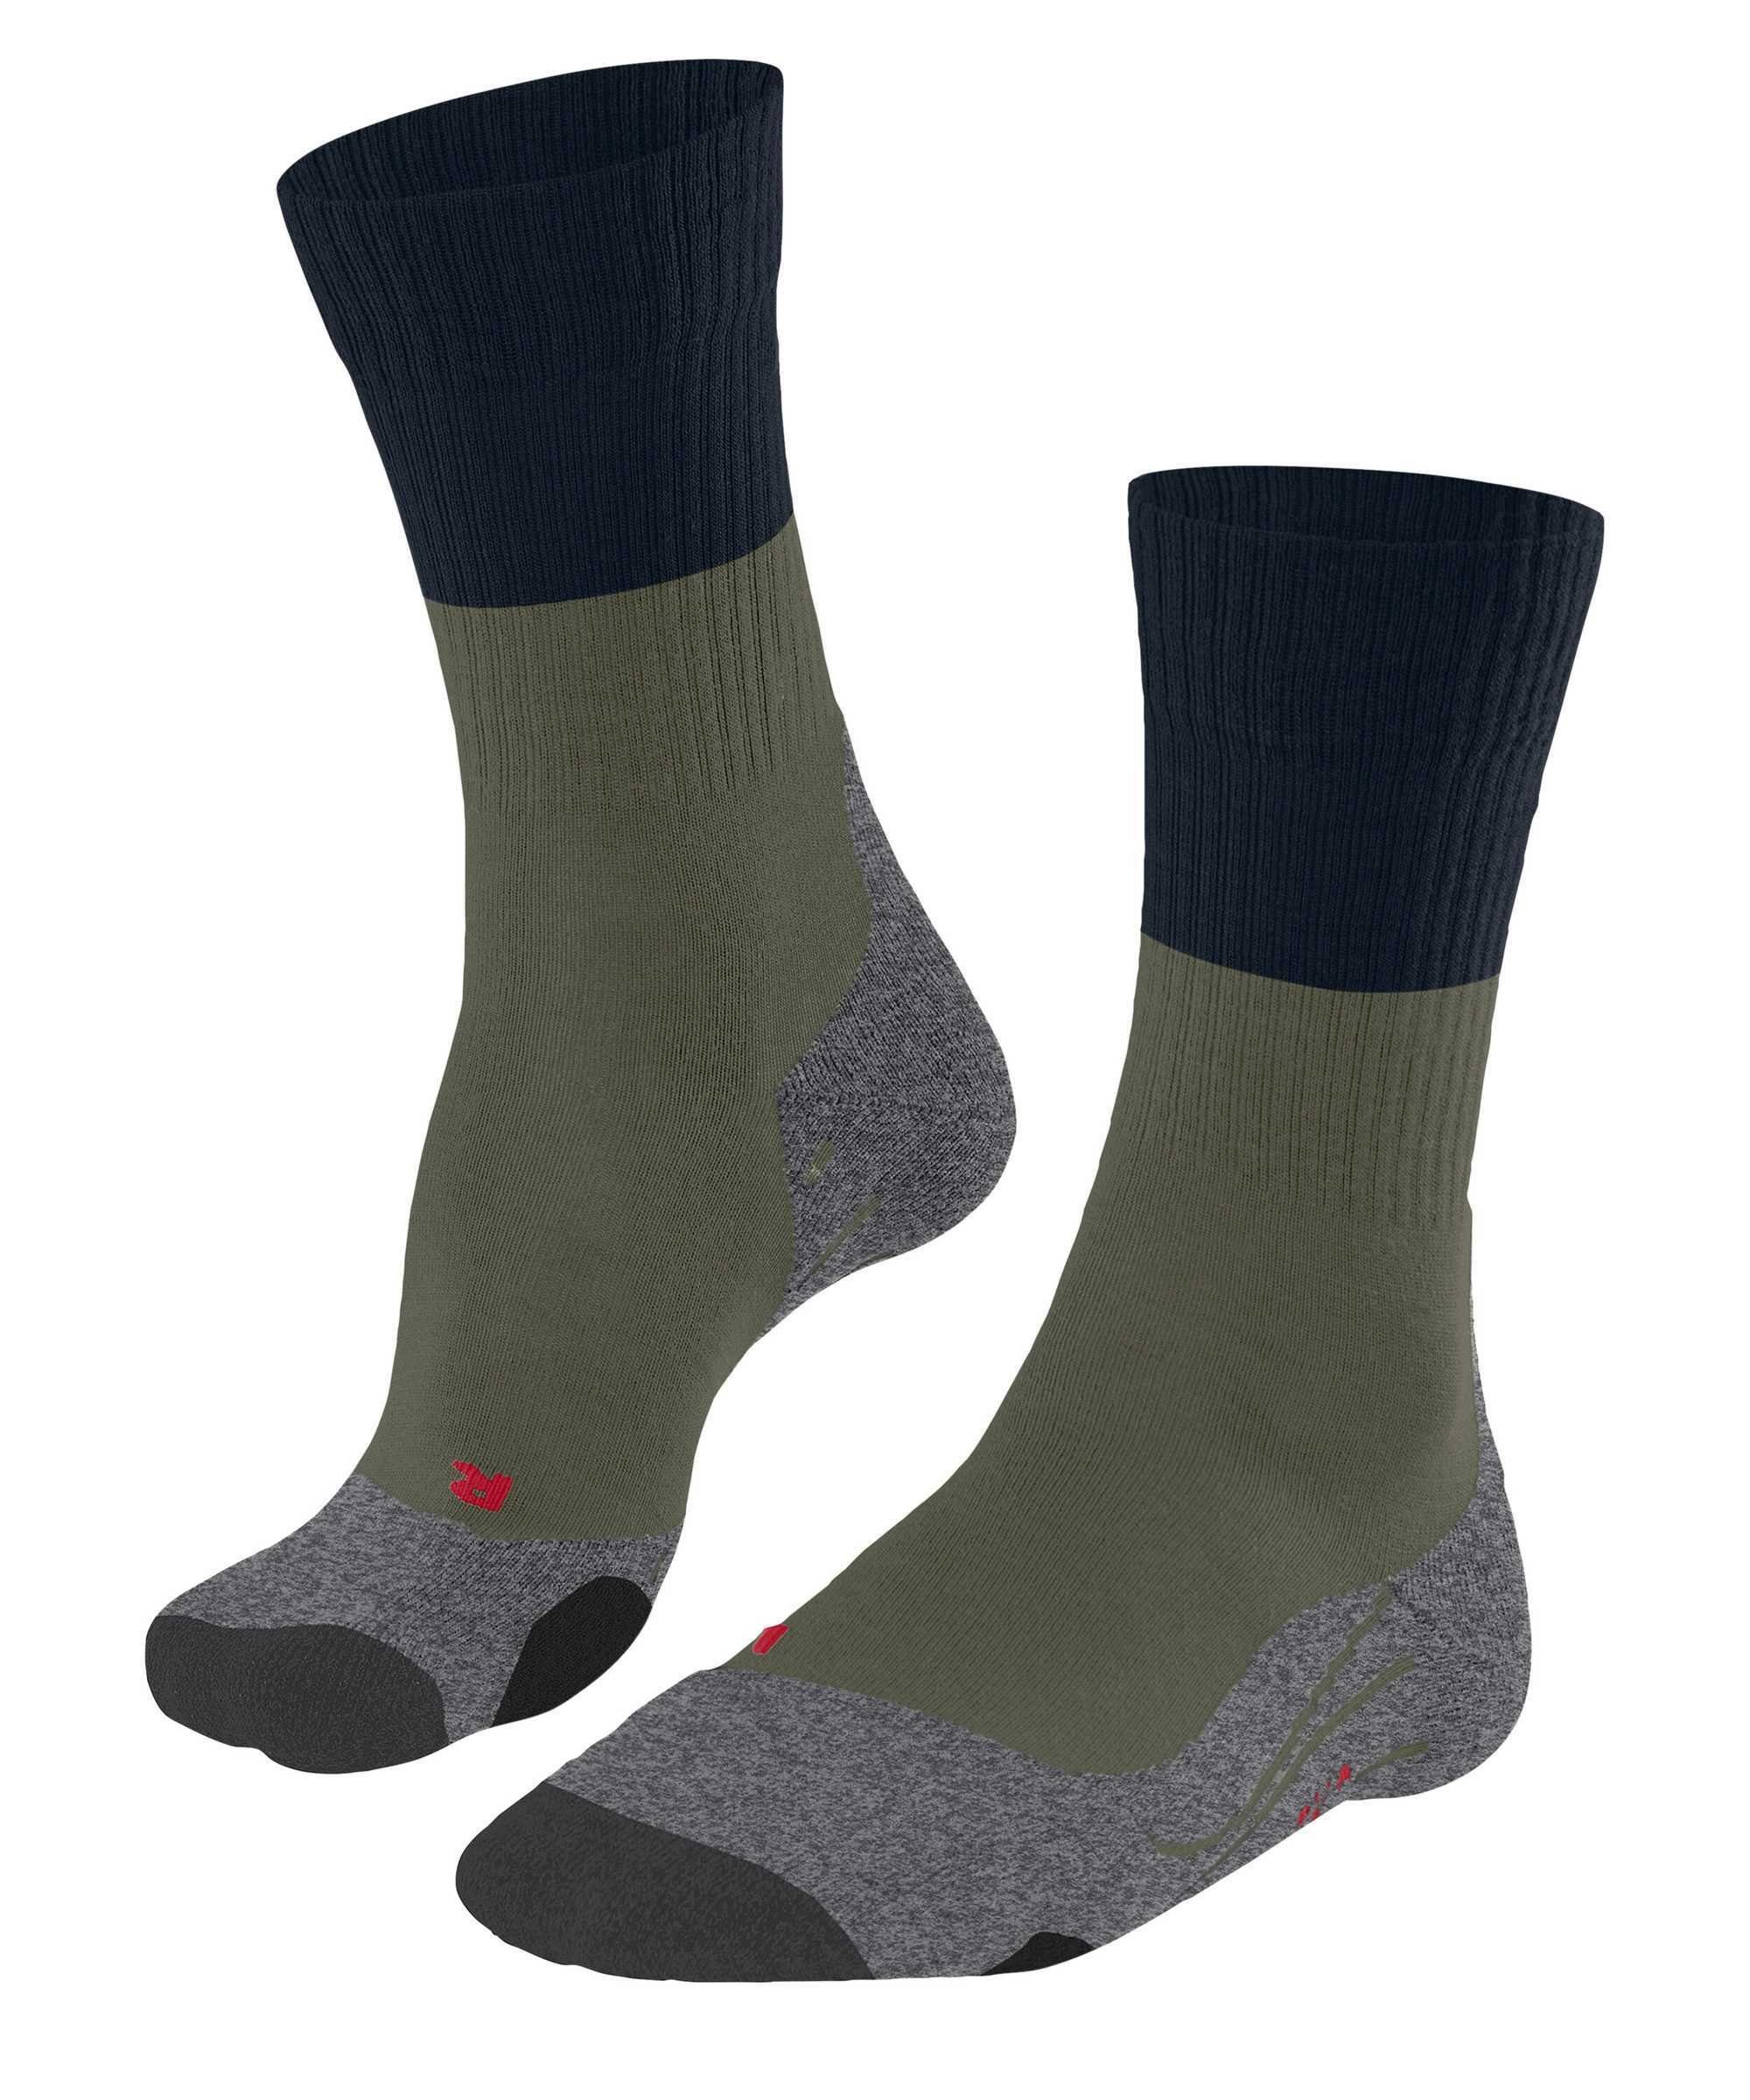 Trekking Grün/Grau (Herb) Sportsocken TK2, Socken FALKE - Polsterung Socken Herren